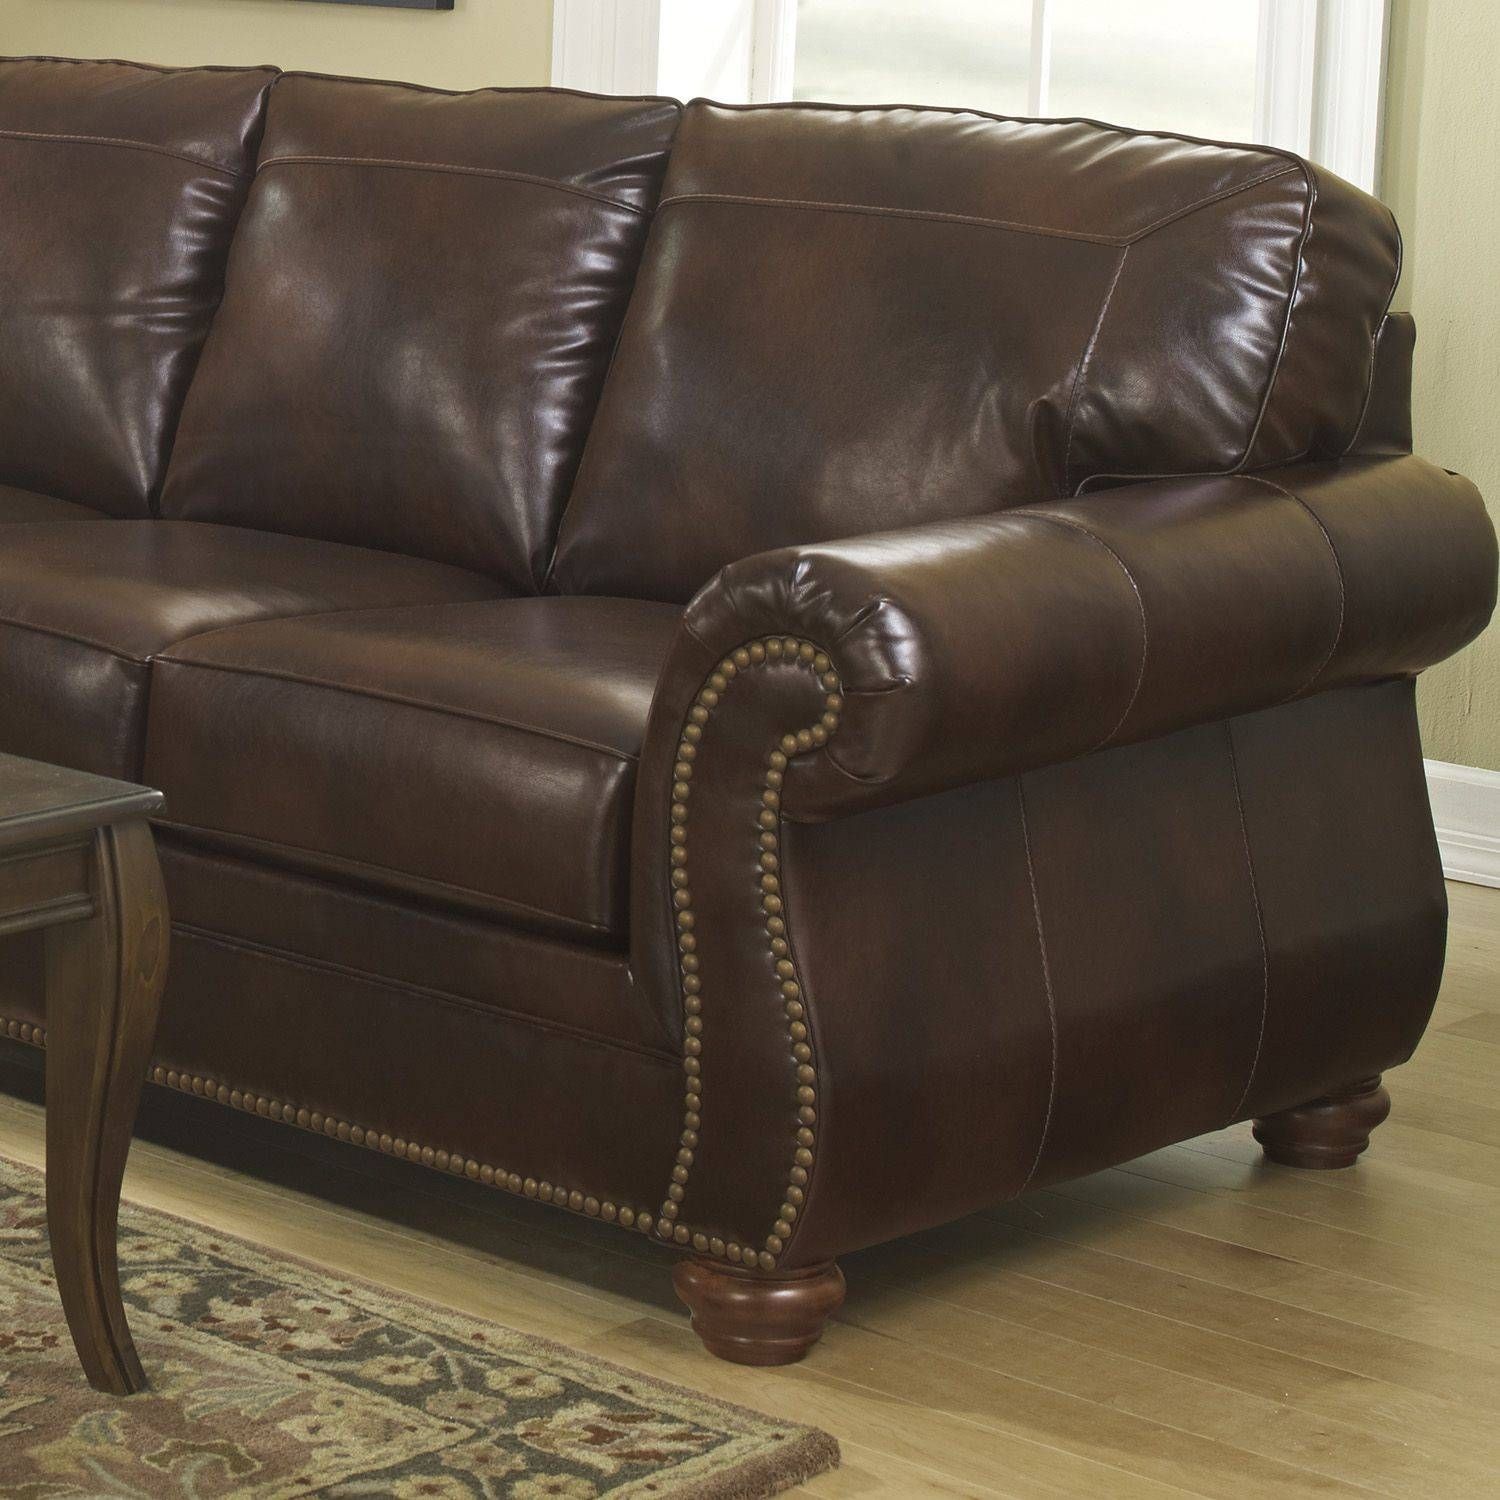 Comfy Berkline Sofa Design At Home — Home Design Stylinghome In Berkline Leather Sofas (View 3 of 15)